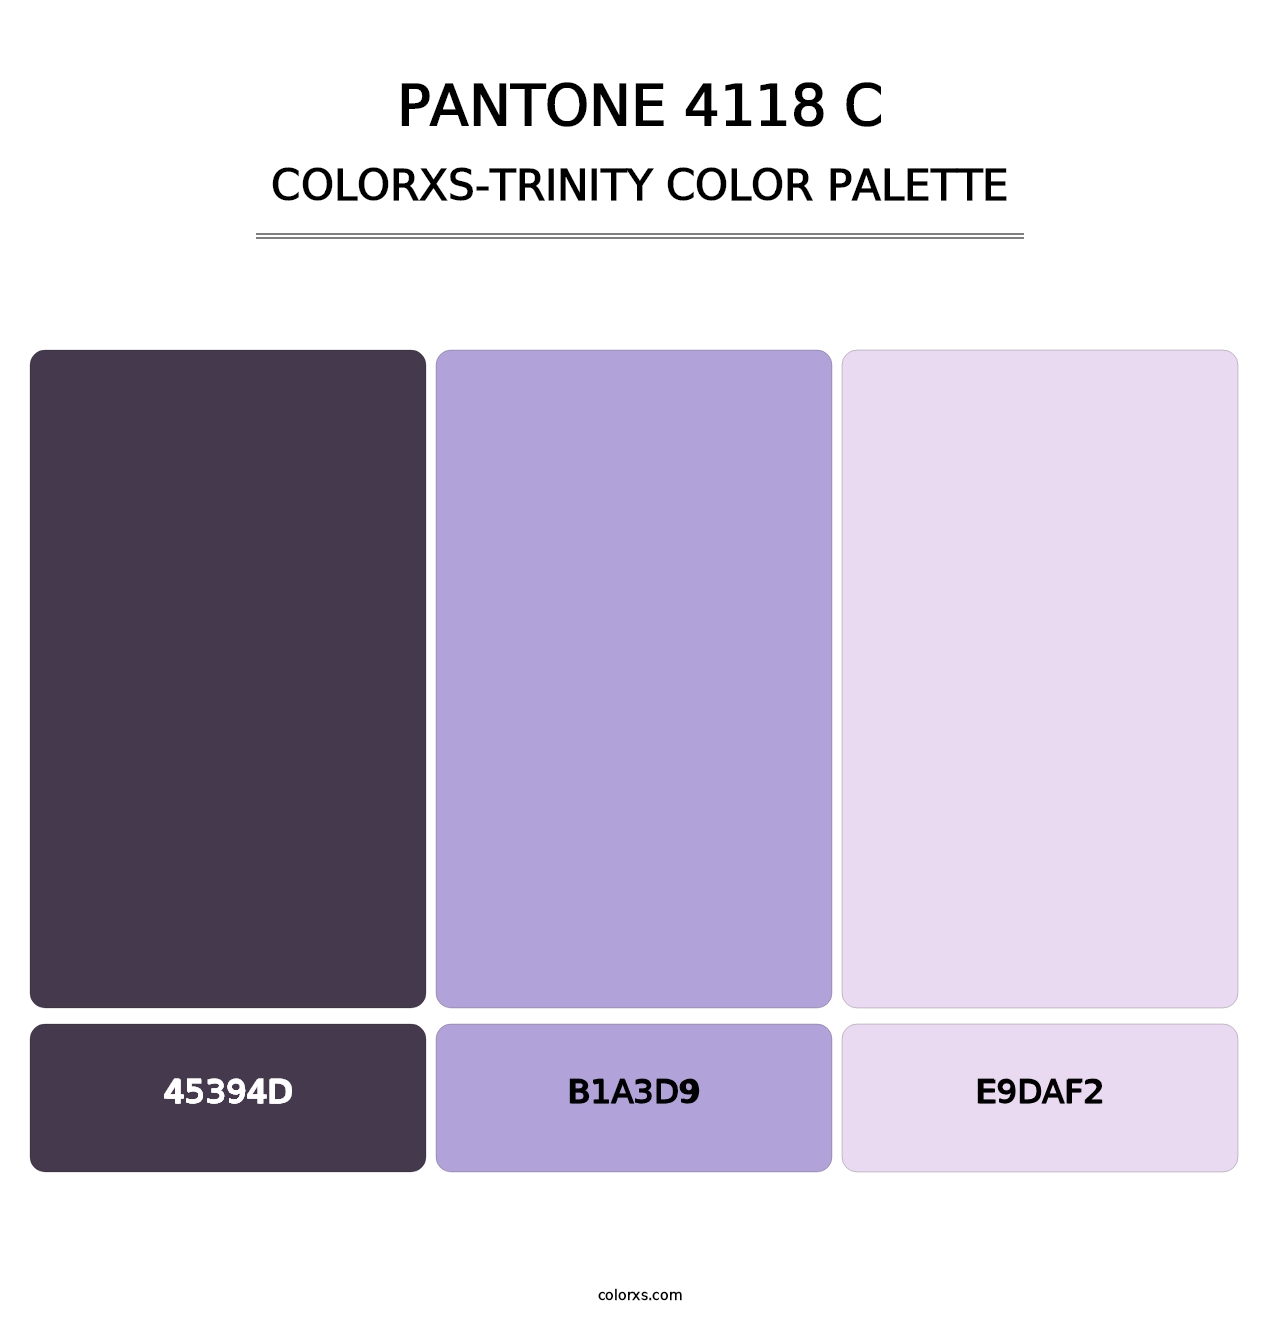 PANTONE 4118 C - Colorxs Trinity Palette